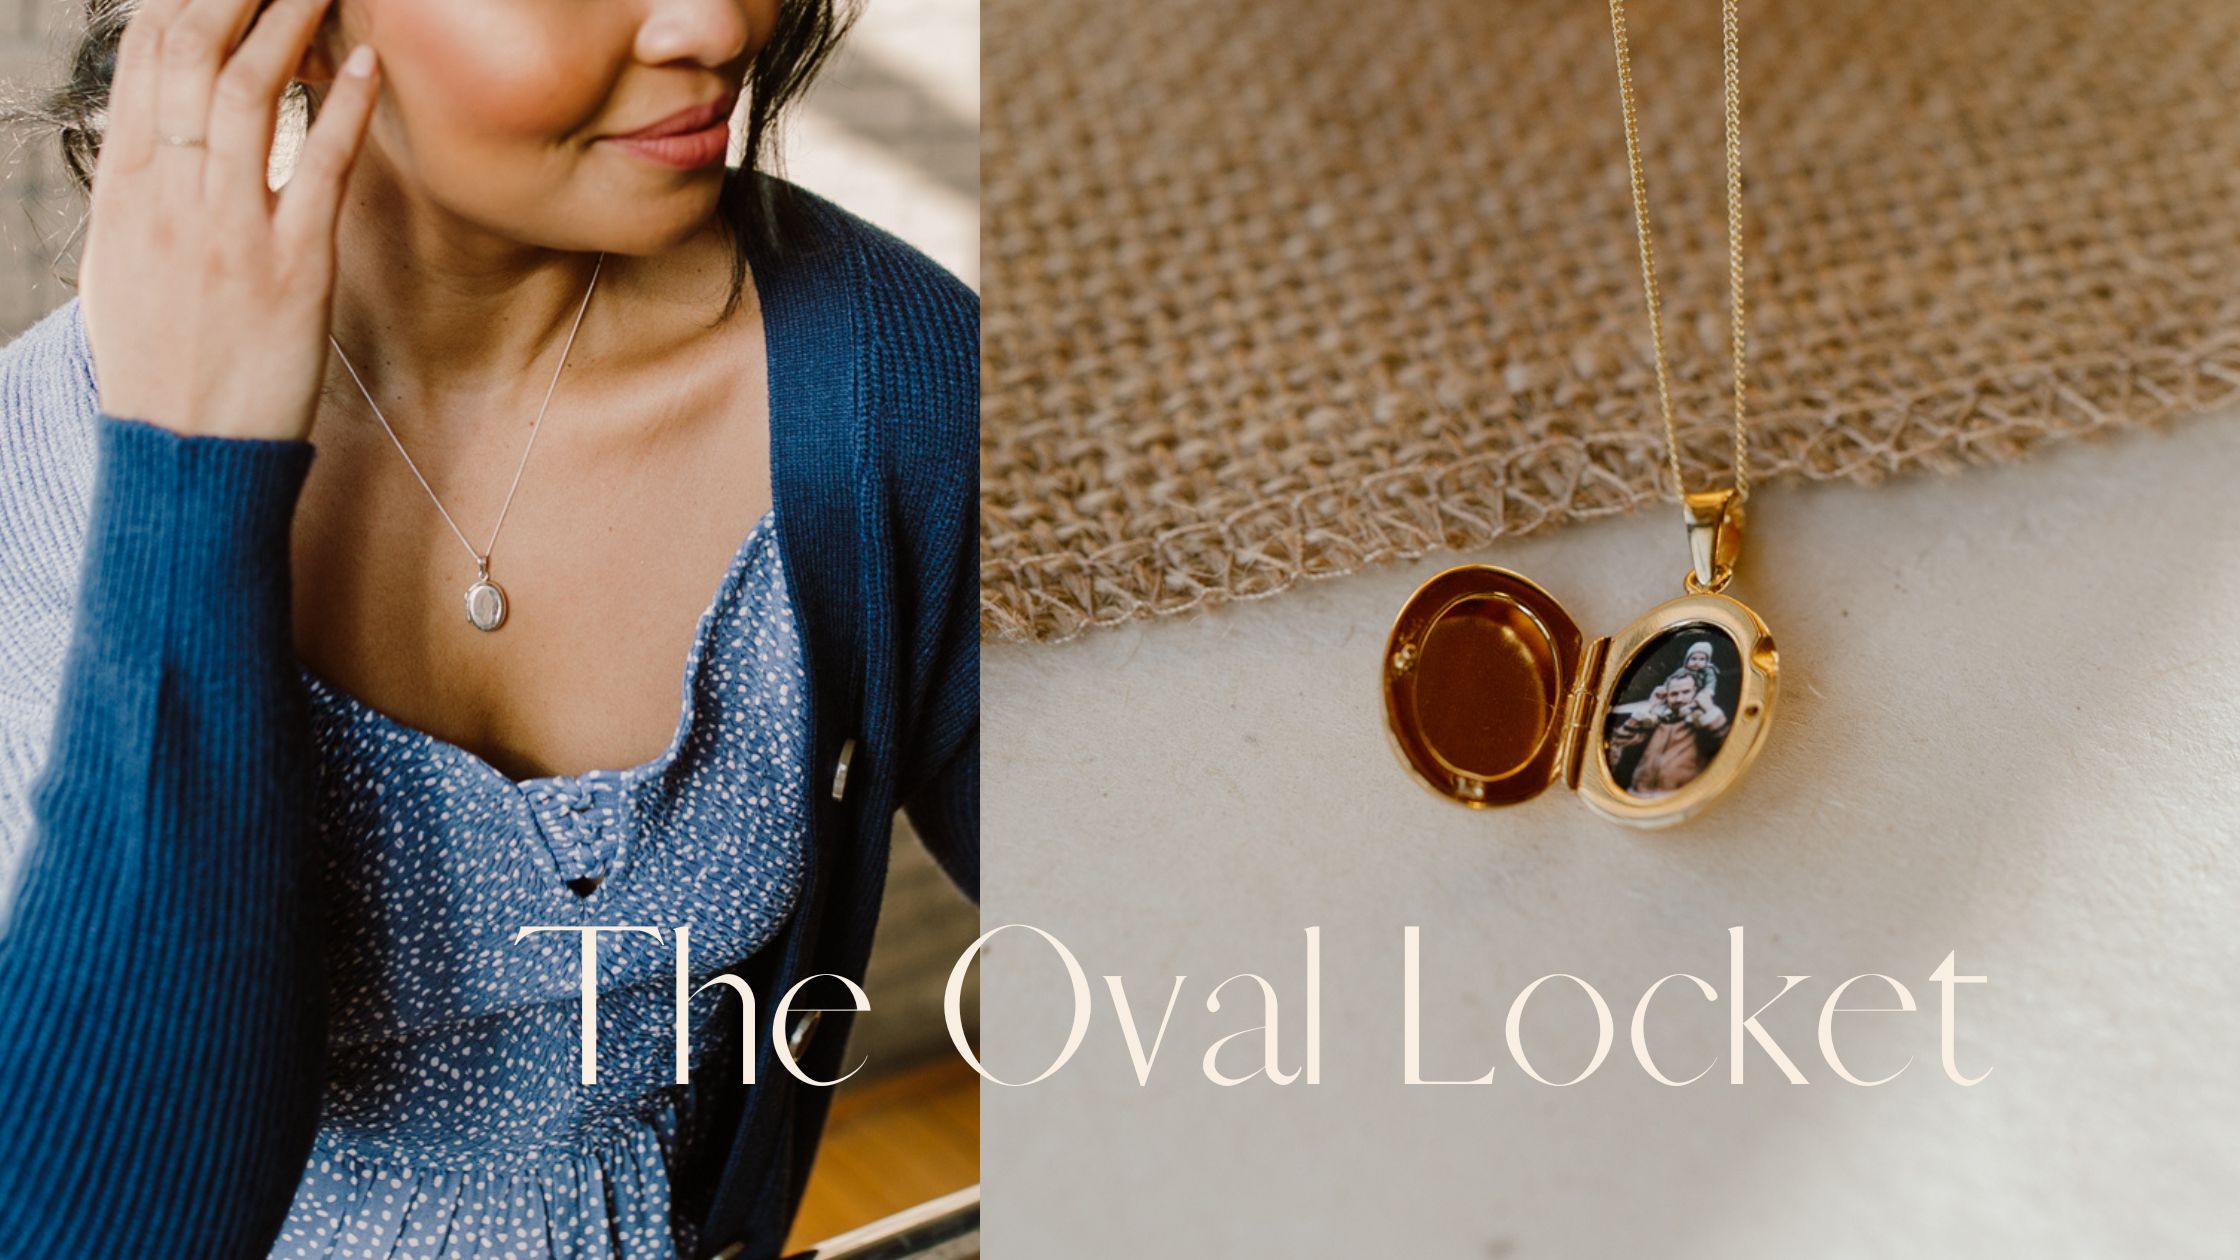 The Oval Locket